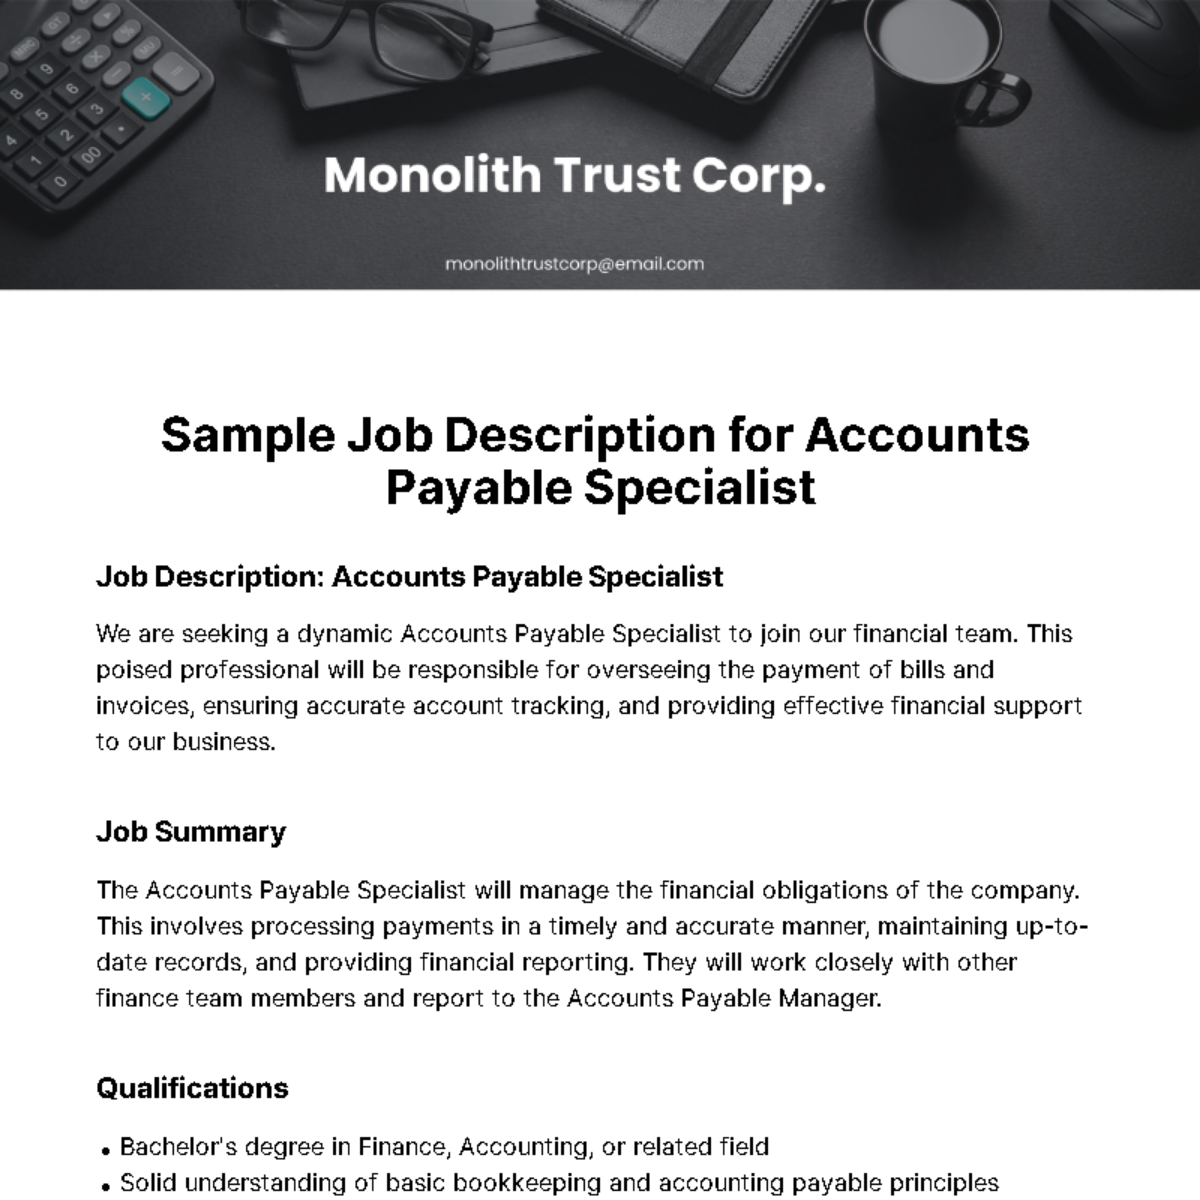 Sample Job Description for Accounts Payable Specialist Template